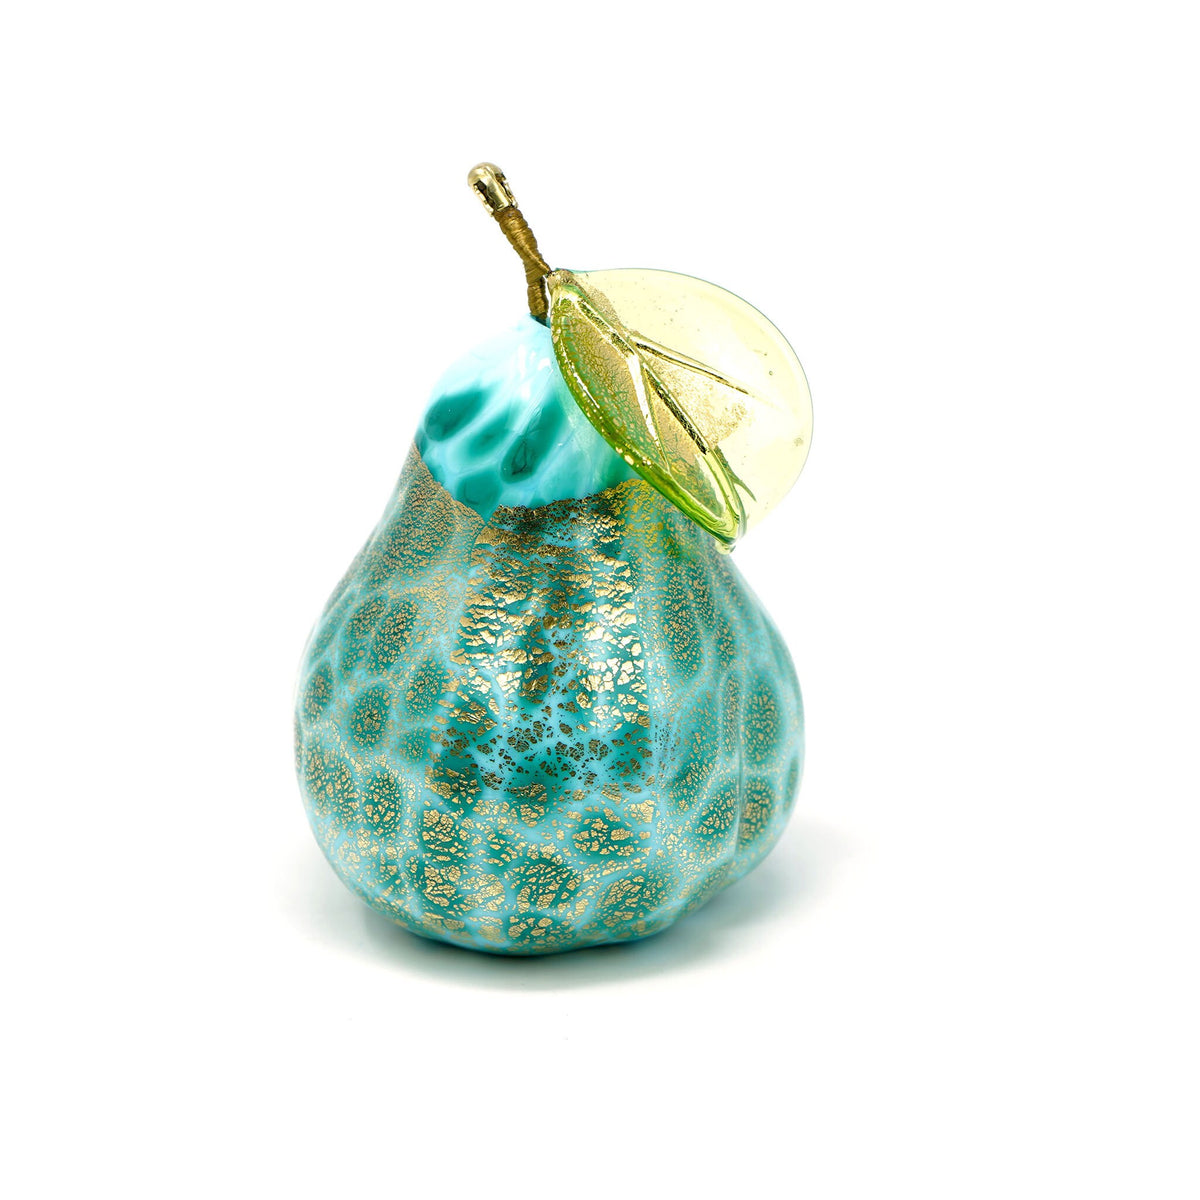 Murano Glass Hand Blown Macchia Pear with Gold Foil, Made In Italy, Gift Idea - My Italian Decor